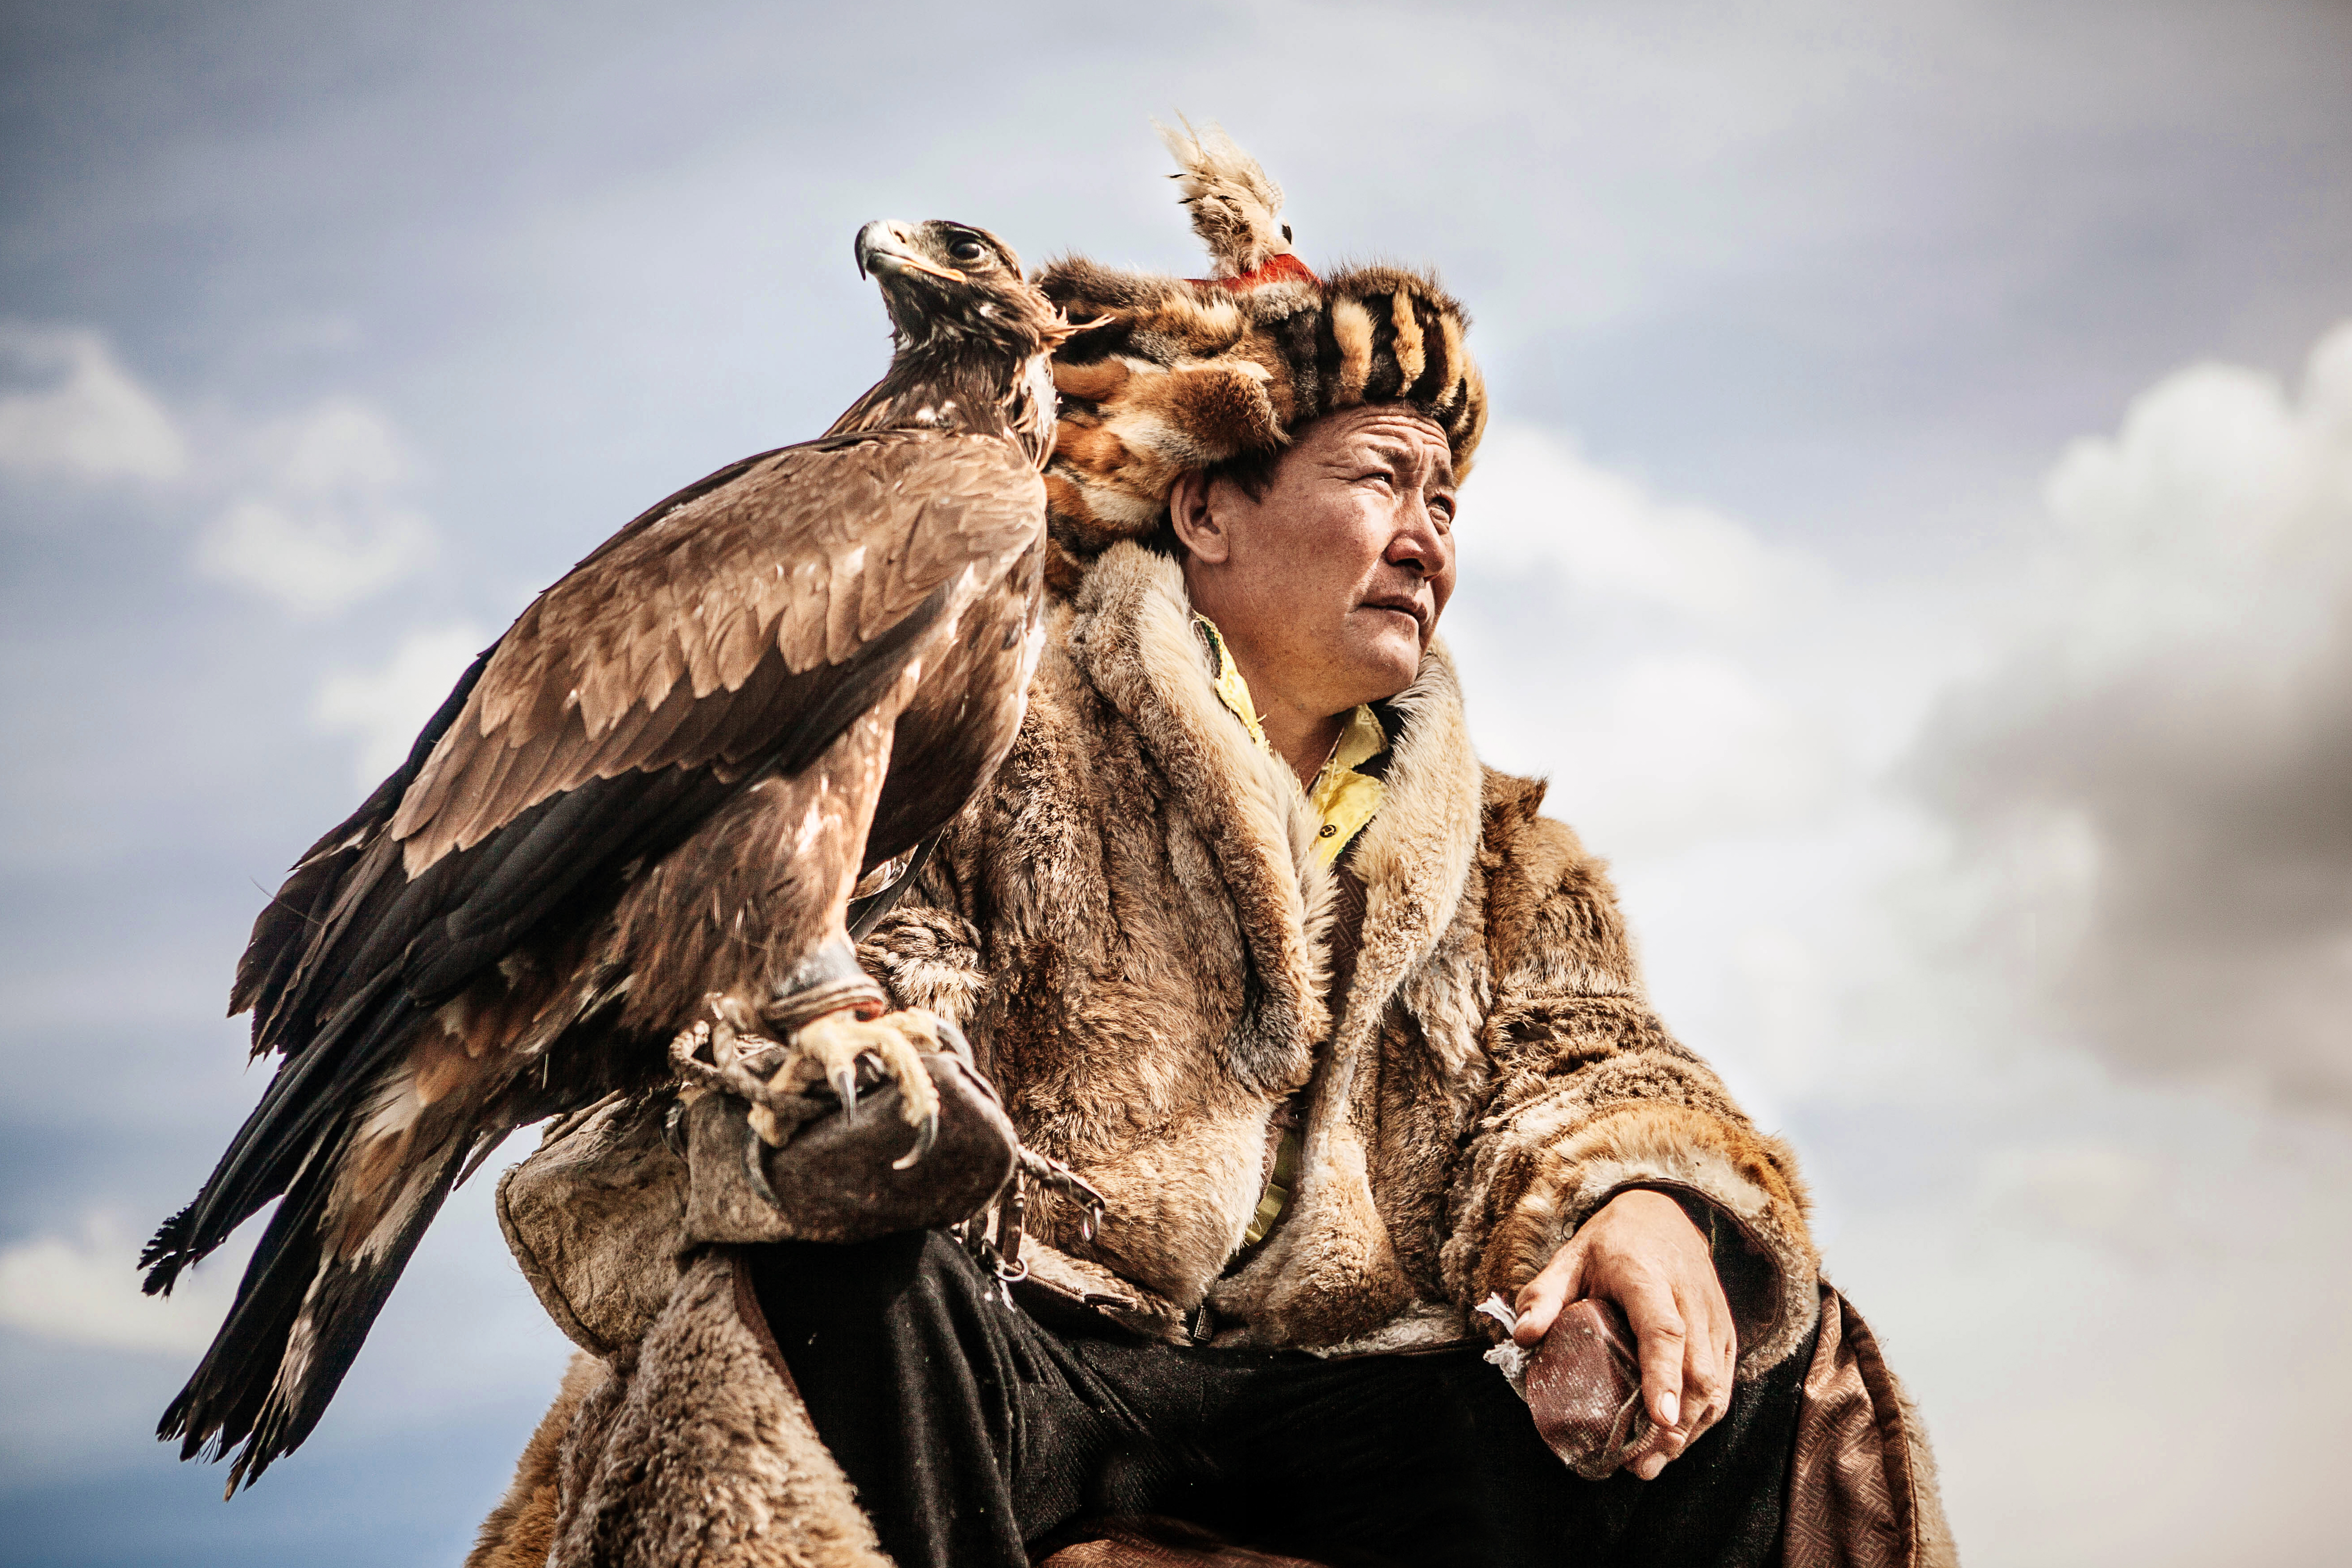 Bashanhan the Eagle Hunter in Mongolia